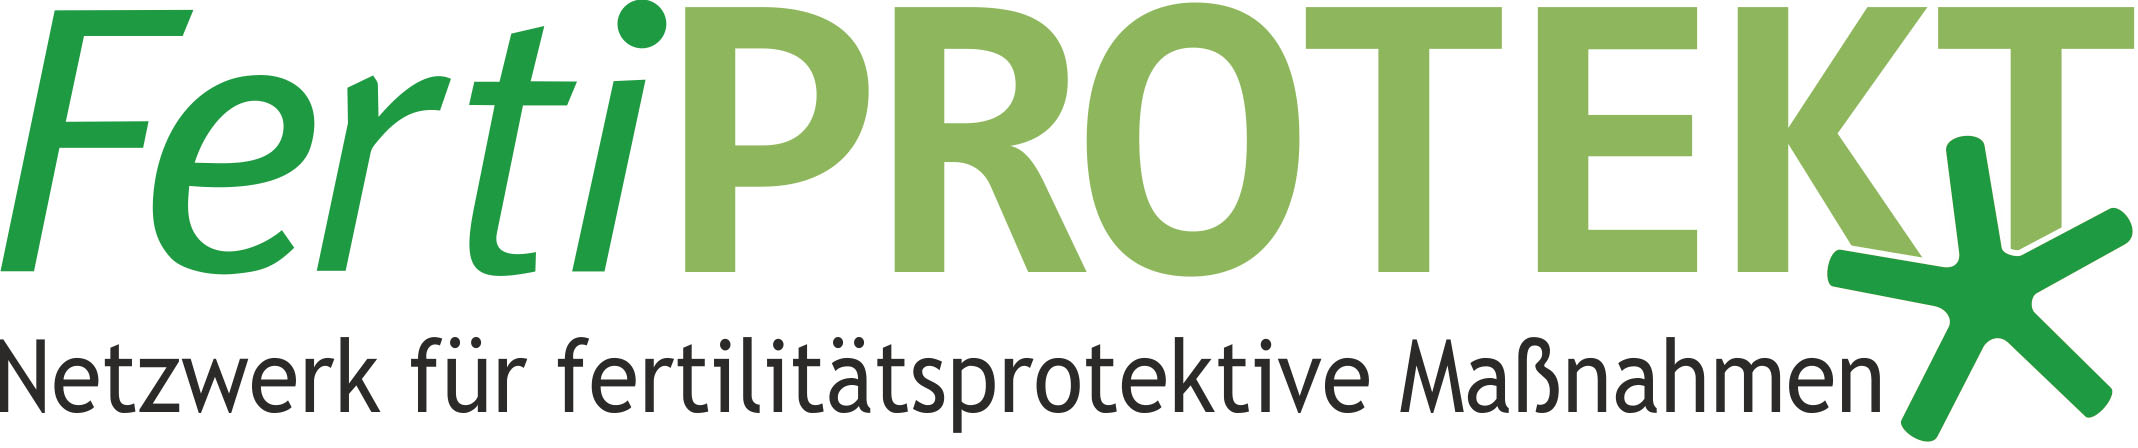 Fertiprotekt Logo C7